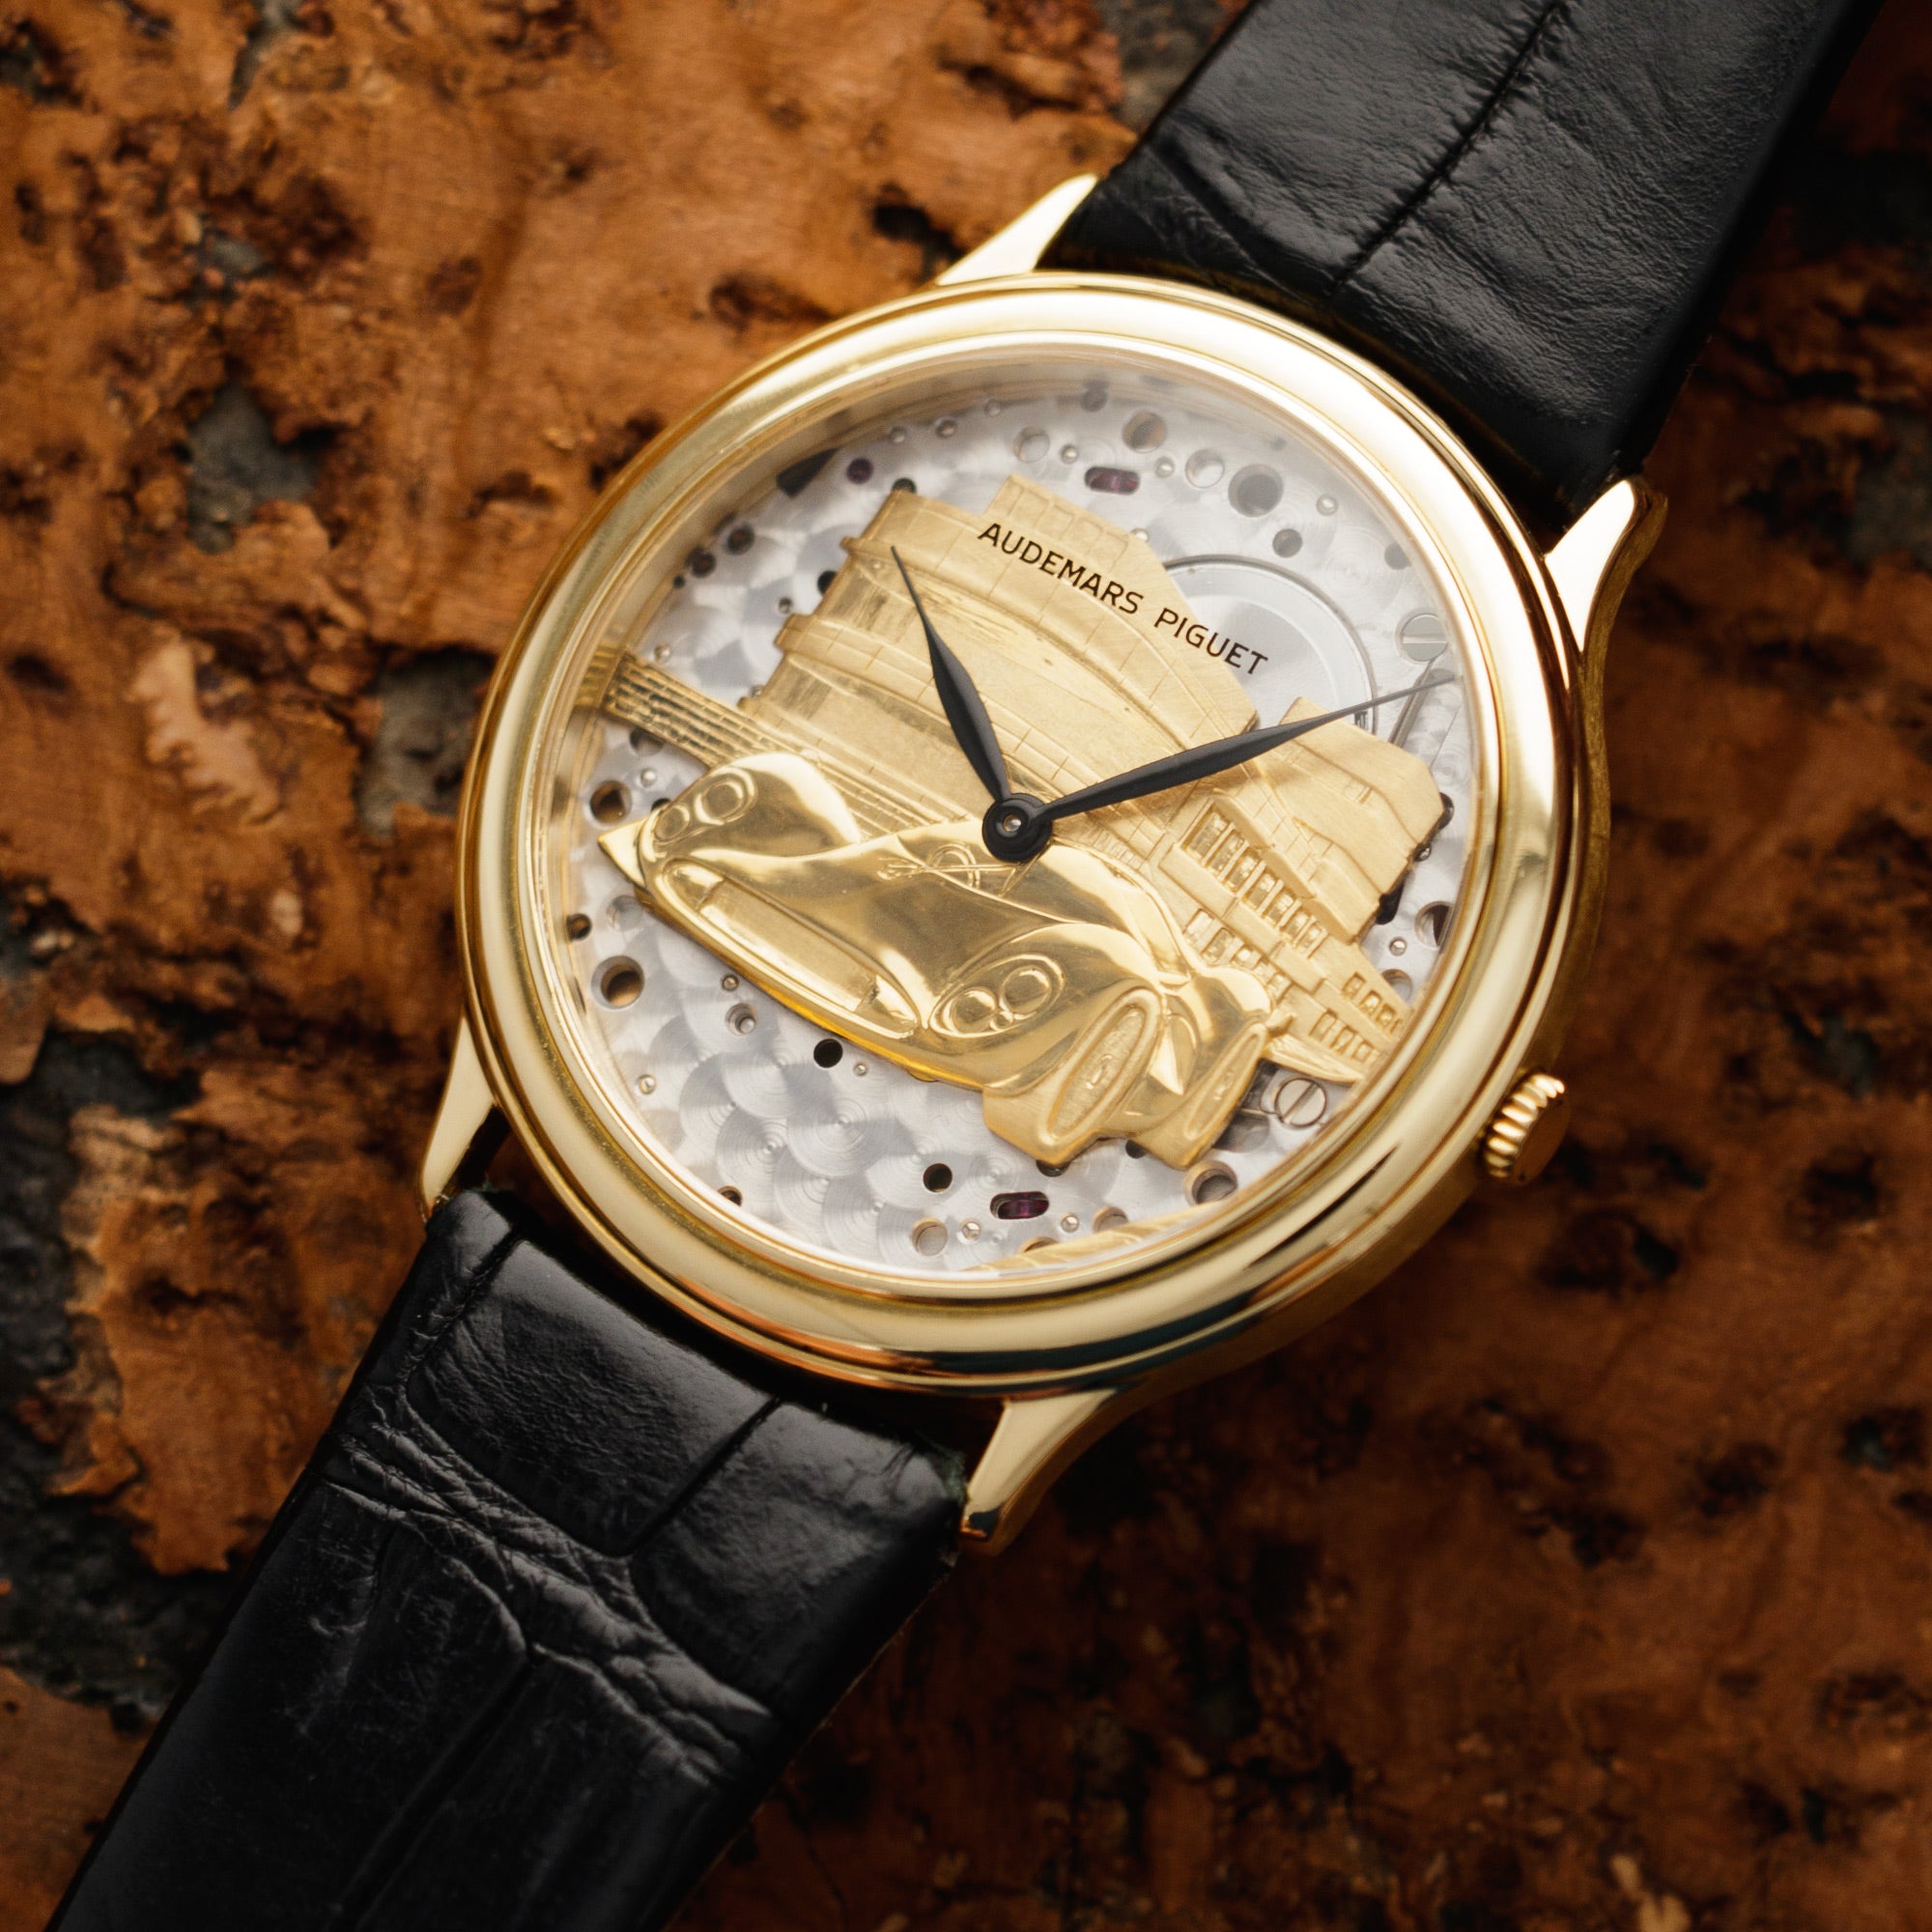 Audemars Piguet - Audemars Piguet Yellow Gold Watch Ref. 14677 with Skeletonized Le Mans Ferrari Dial - The Keystone Watches